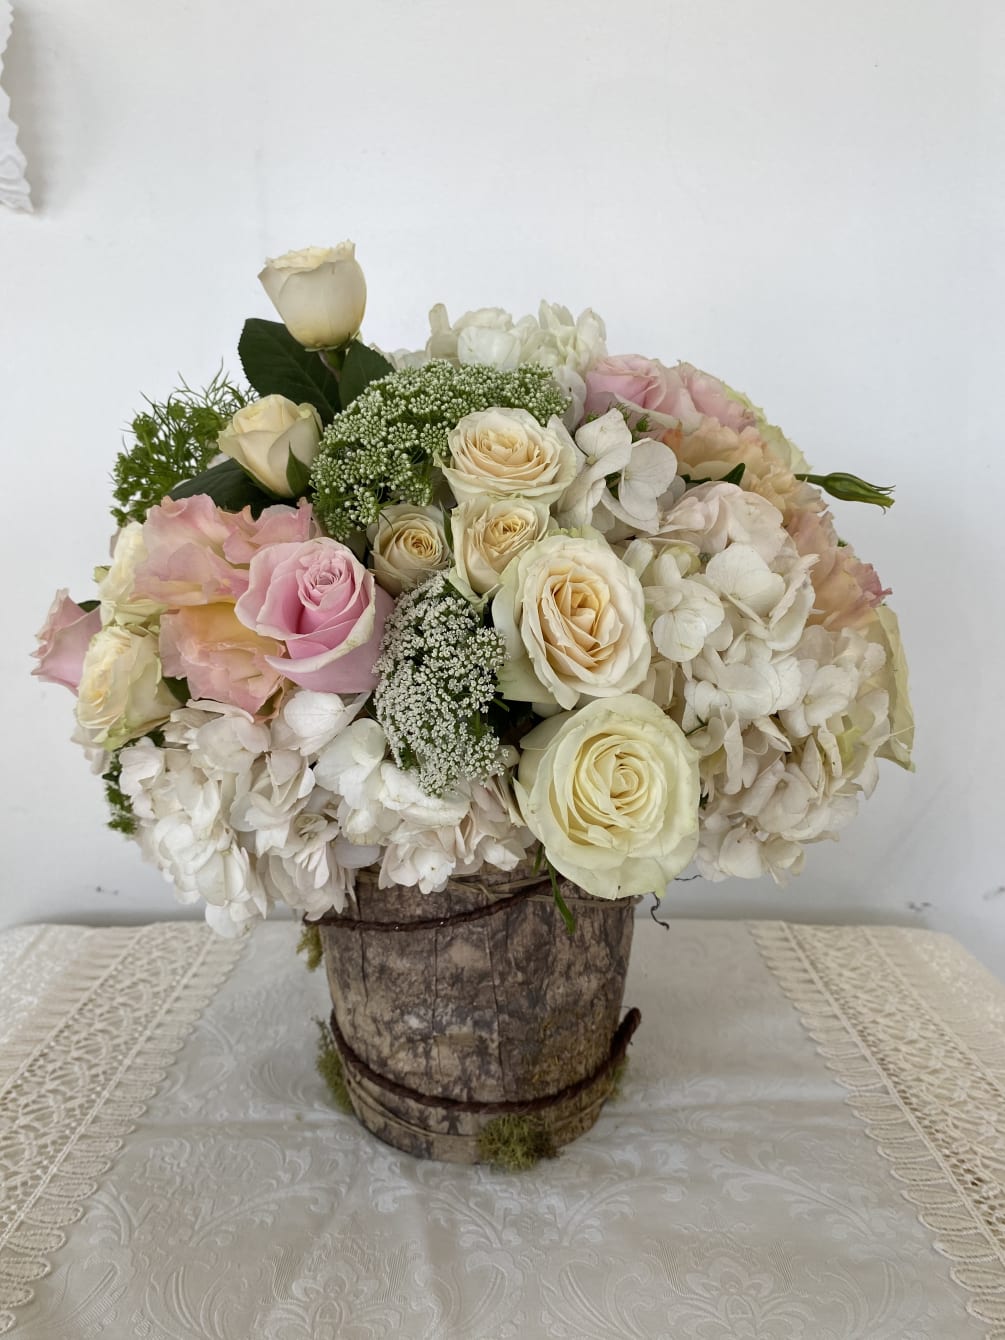 Seasonal  blush and white flower blend arranged in a custom made